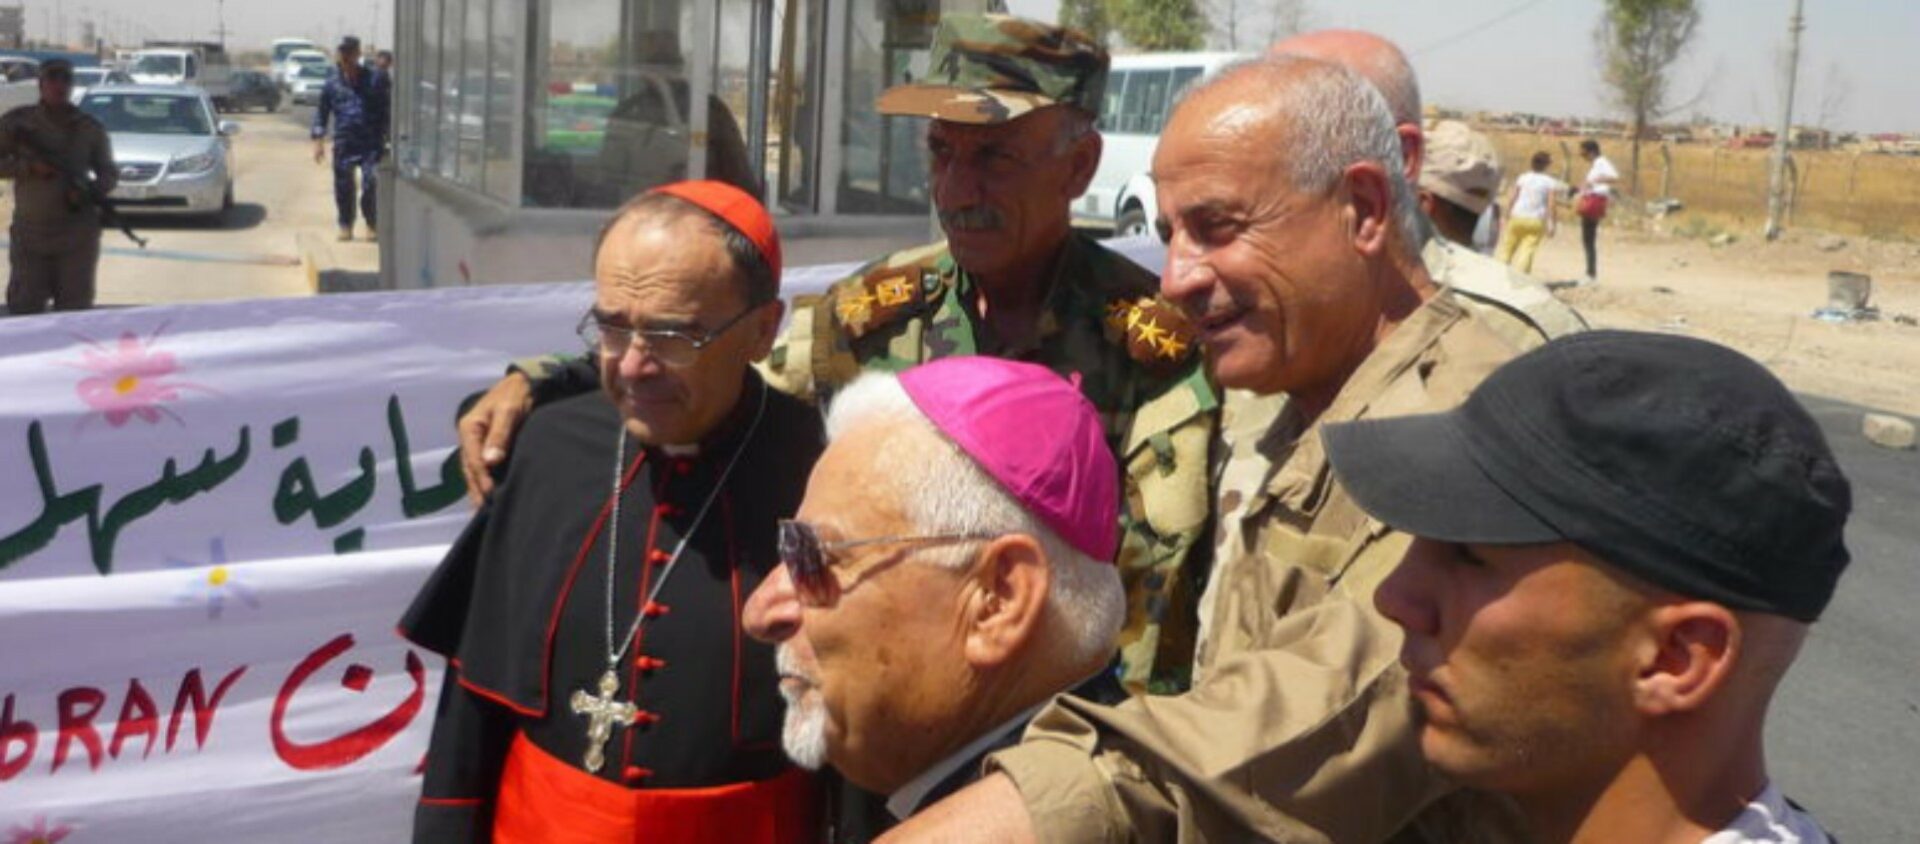 Juillet 2017  Le cardinal Barbarin à Qaraqosh avec Mgr Petros Mouché, archevêque syriaque catholique de Mossoul et Qaraqosh  | © rcf.fr